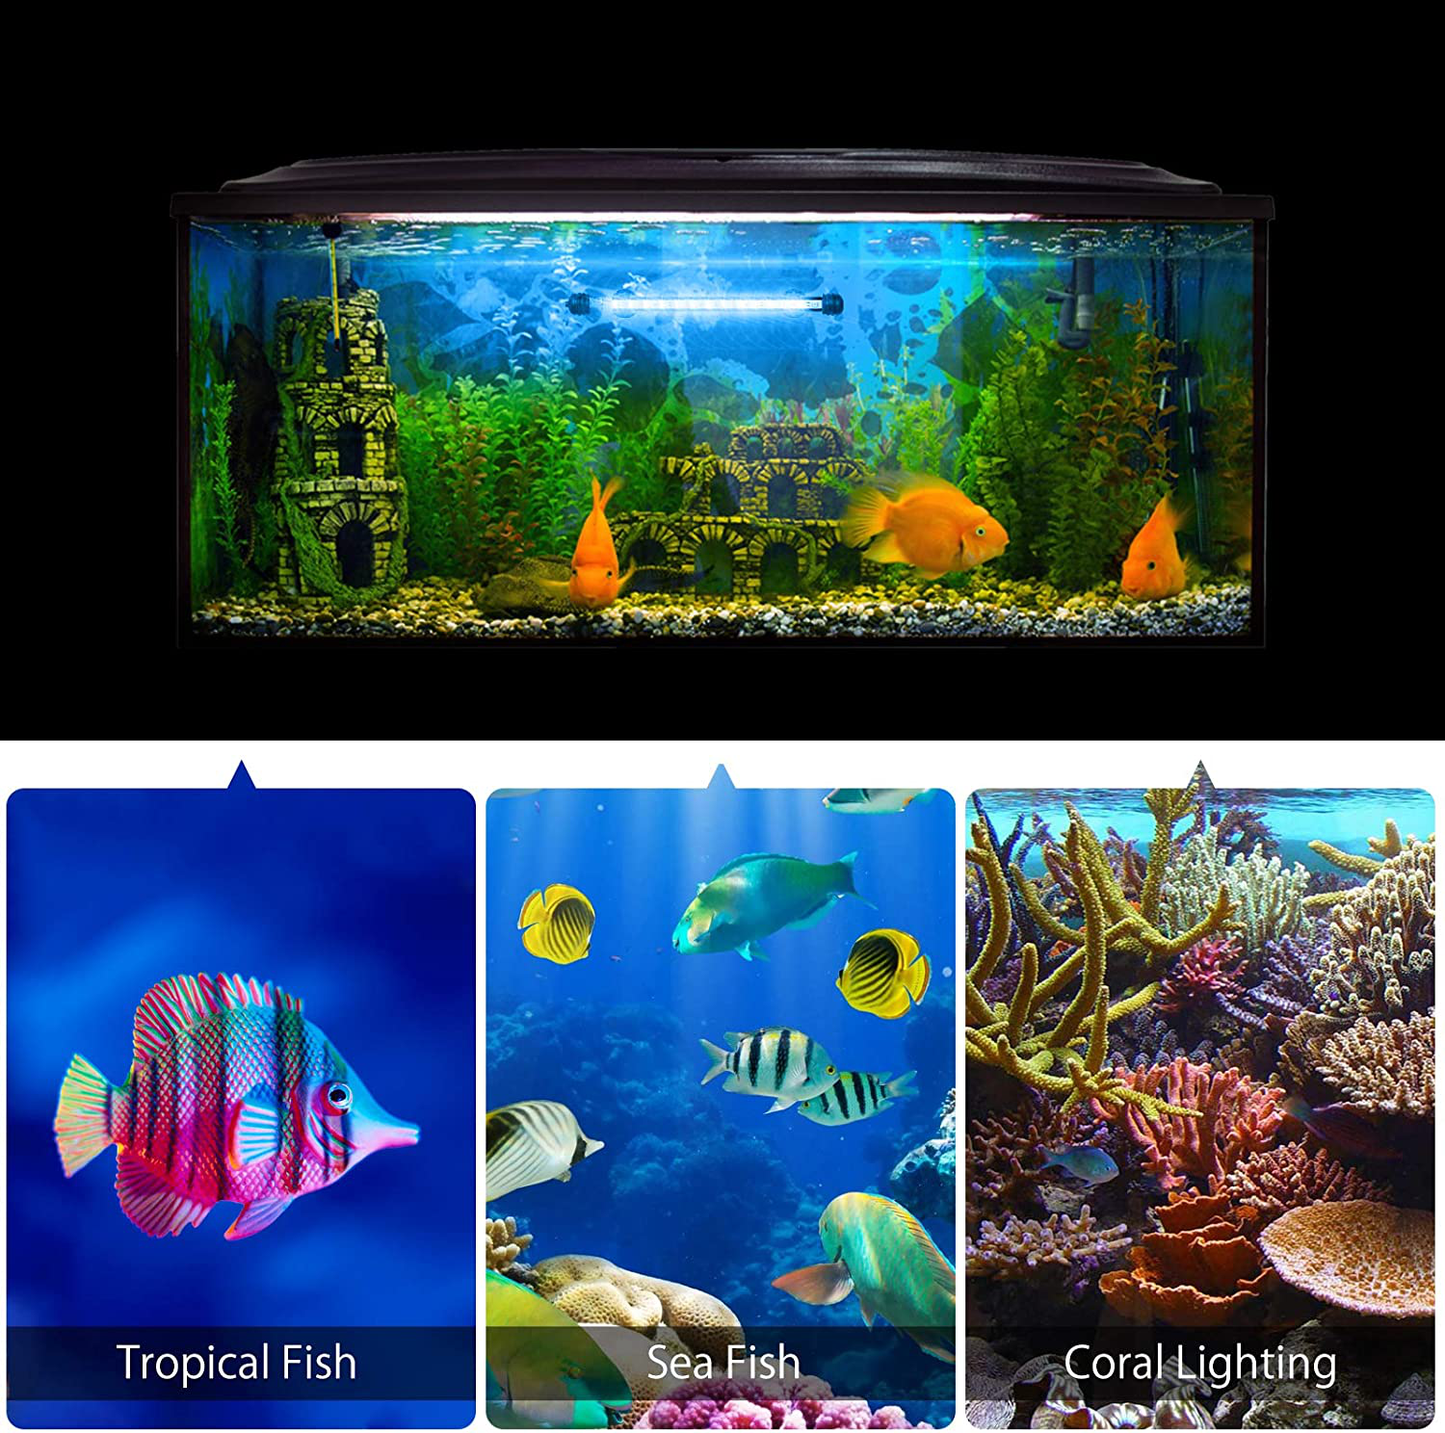 LED Aquarium Light, Underwater RGB LED Lights for Fish Tank, 16 Million Vibrant Colors Choosable Lighting Colors, LED Fish Tank Light with Remote Controller+ APP Control, Upgraded Version